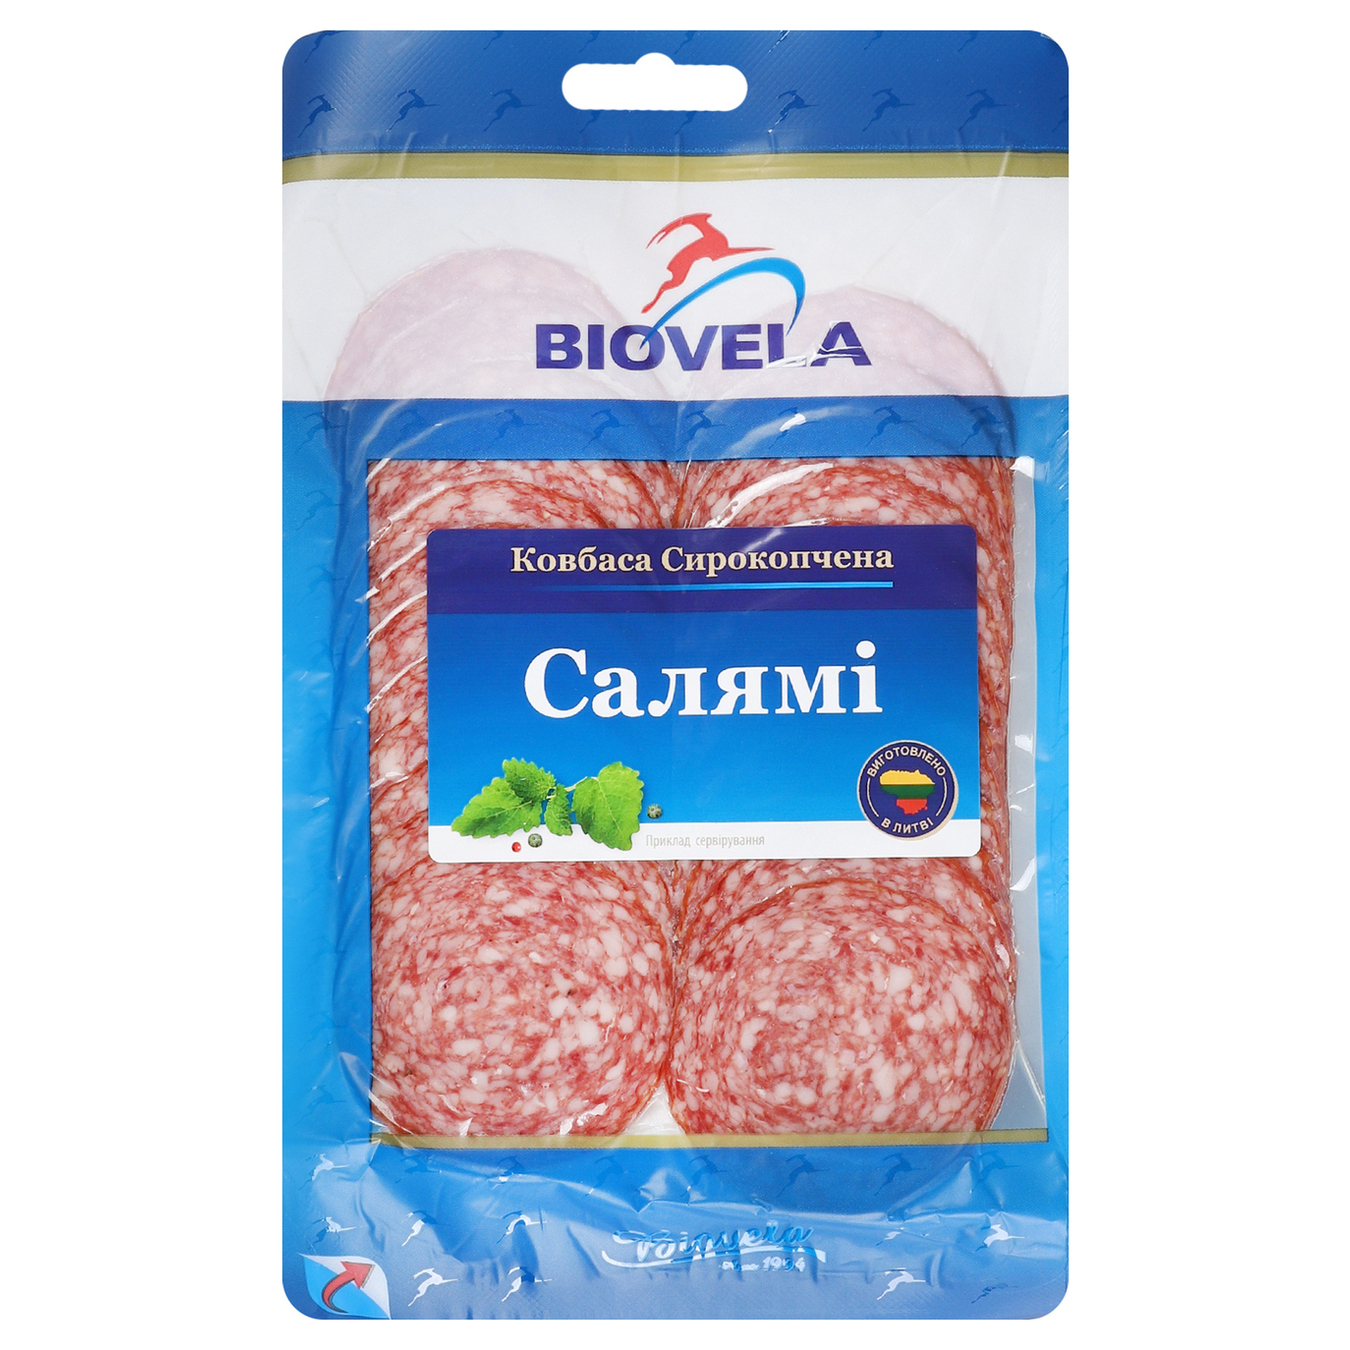 Sausage Biovela Salami raw smoked cut 110g